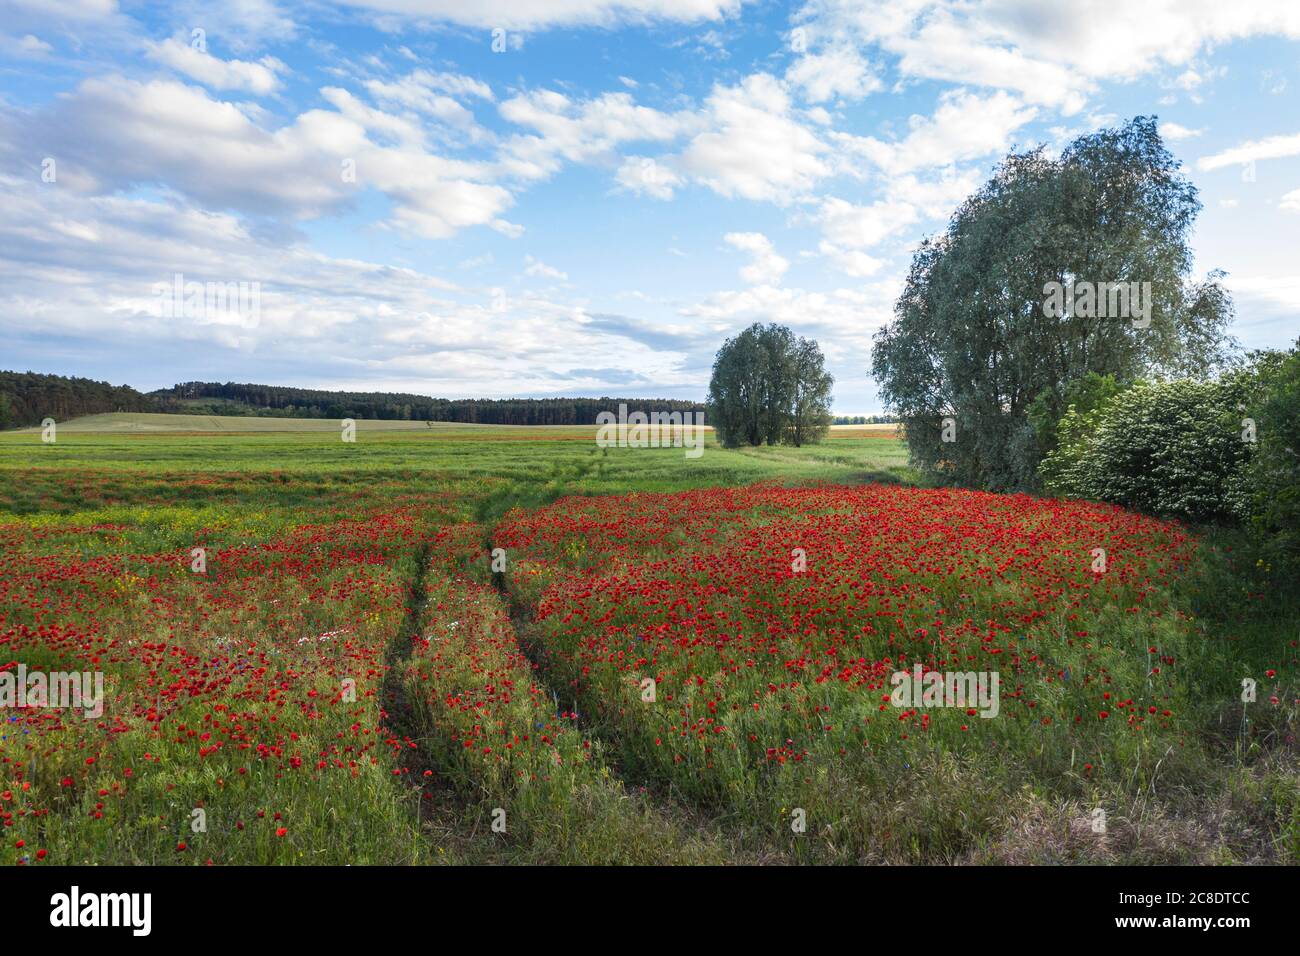 Germany, Brandenburg, Drone view of red poppy field in spring Stock Photo